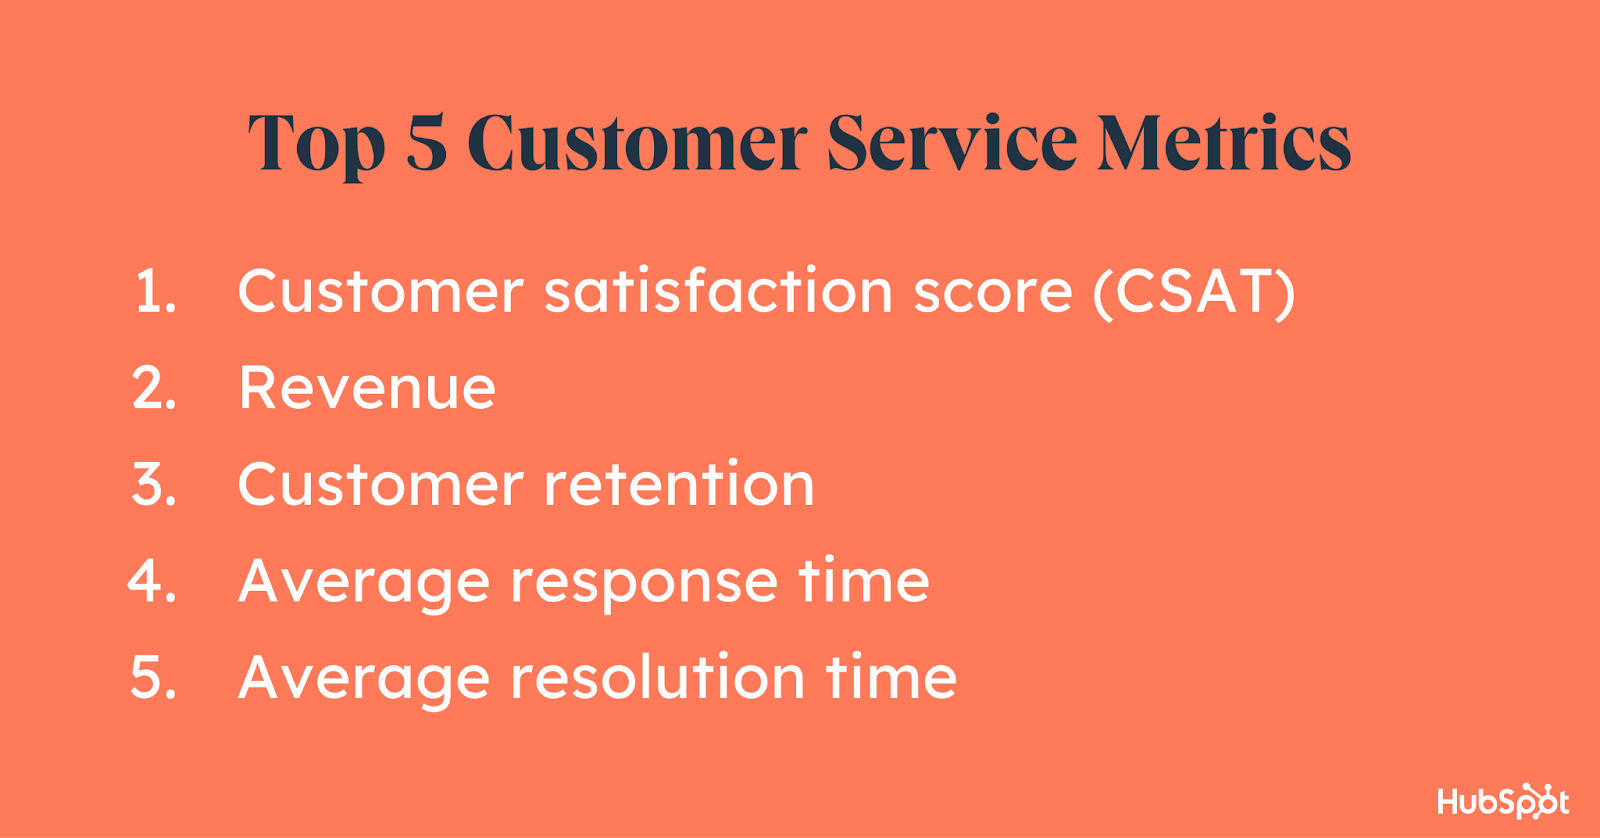 List of top 5 customer service metrics